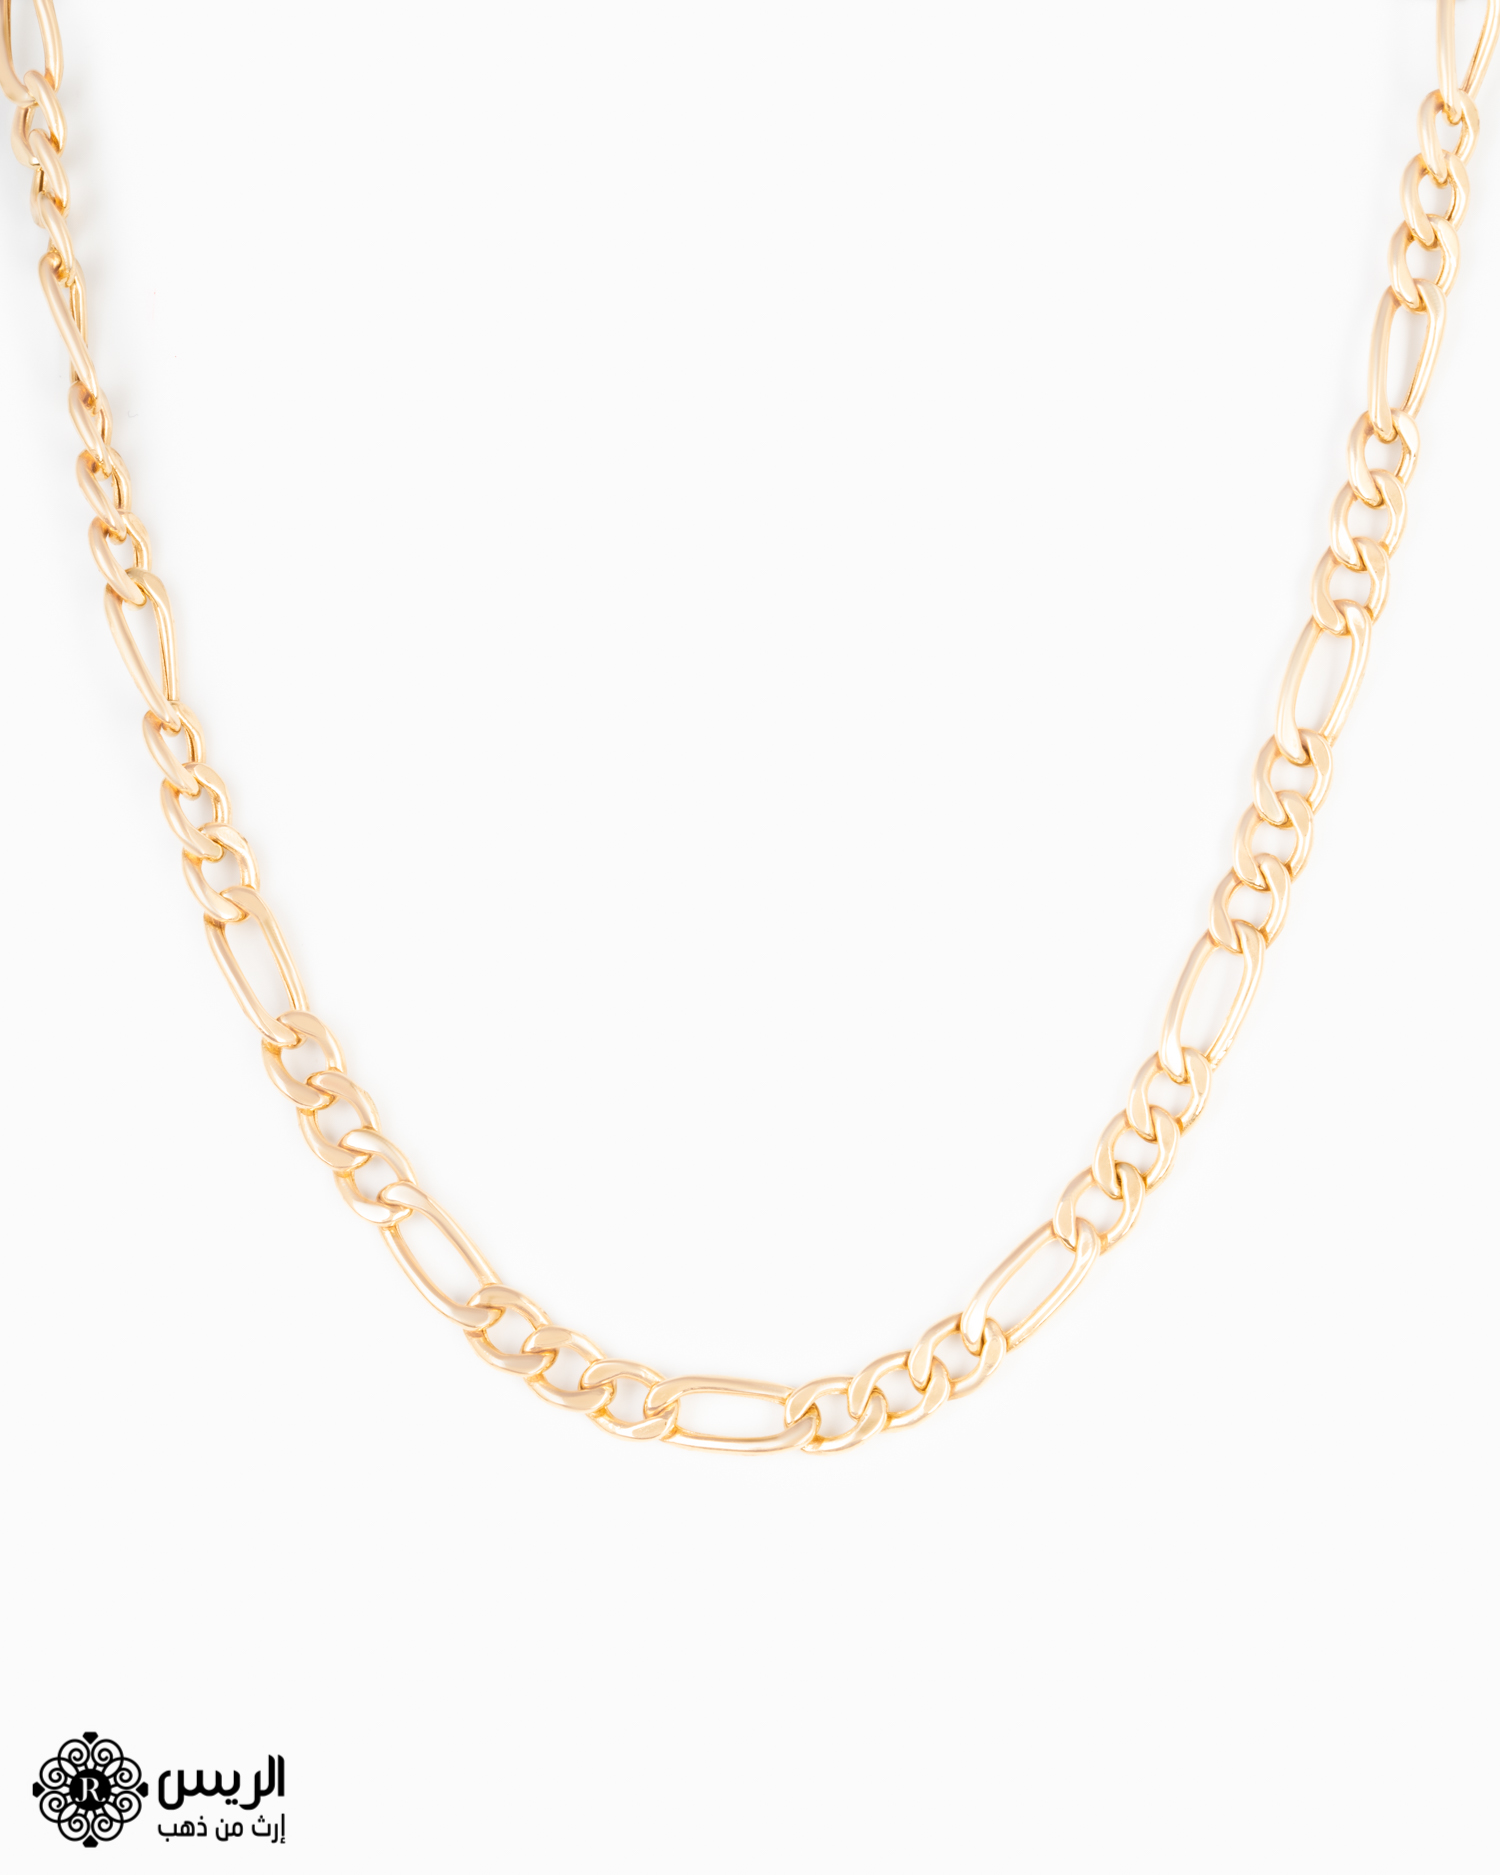 Raies jewelry chain necklace عقد جنزير الريس للمجوهرات